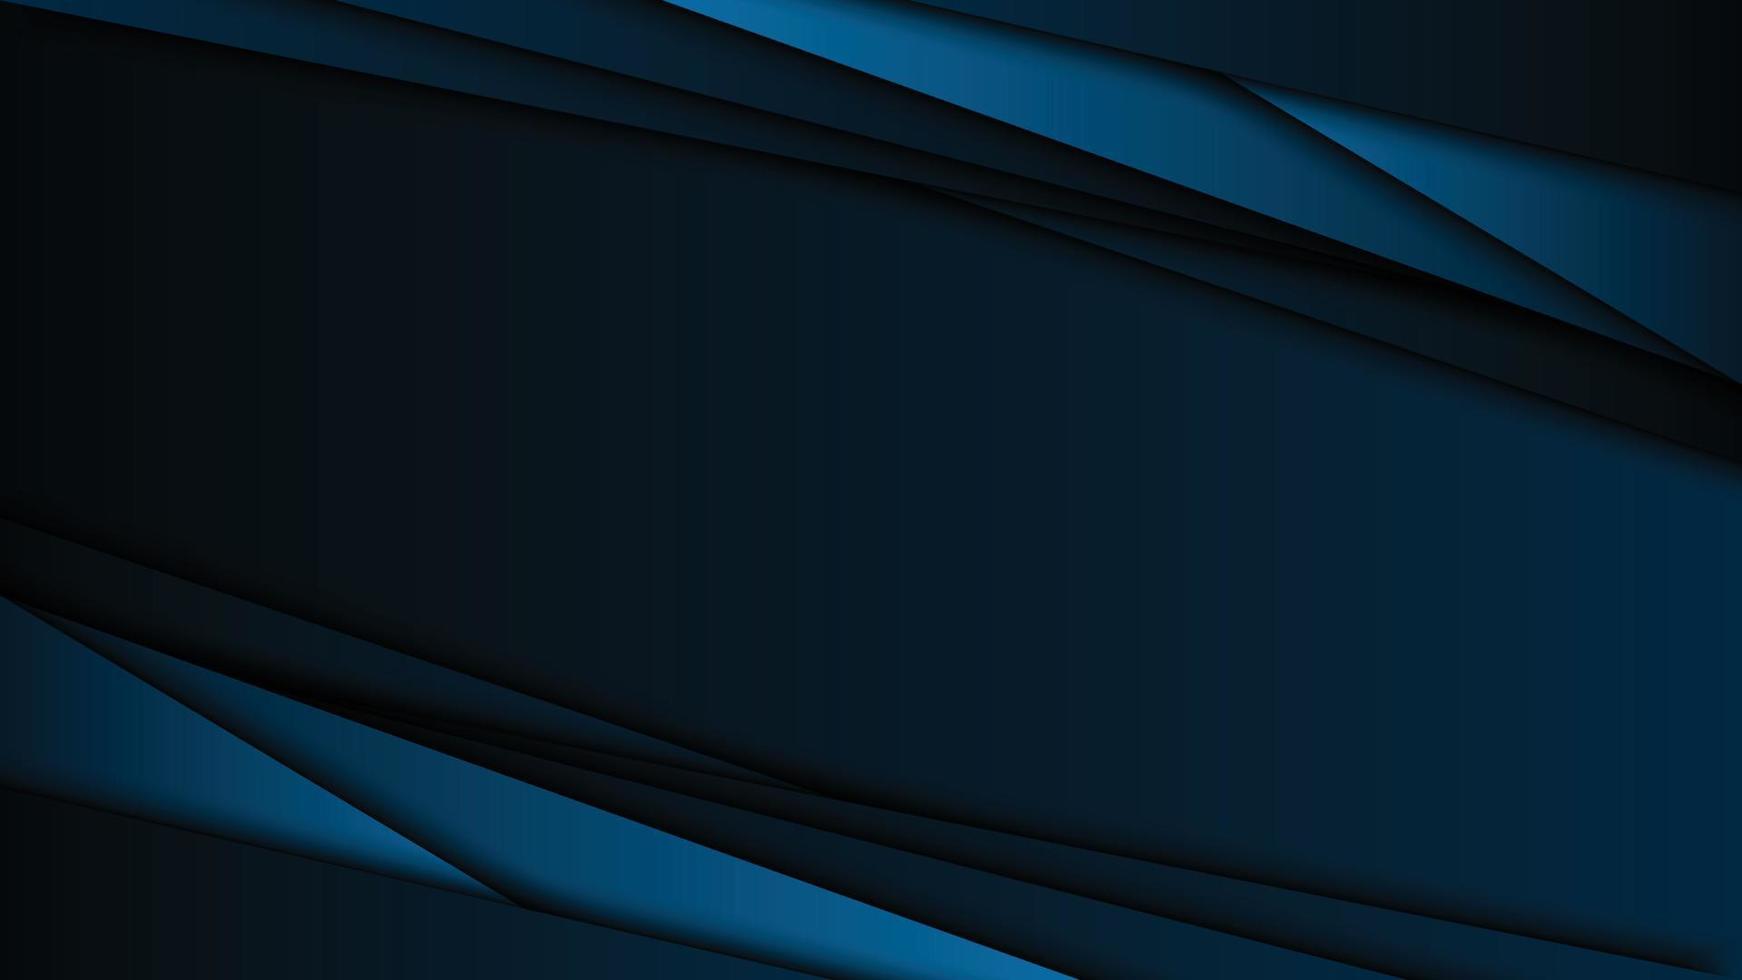 fondo azul marino moderno con estilo abstracto. diseño de ilustración vectorial para presentación, banner, portada, web, volante, tarjeta, afiche, papel tapiz, textura, diapositiva, revista y powerpoint vector